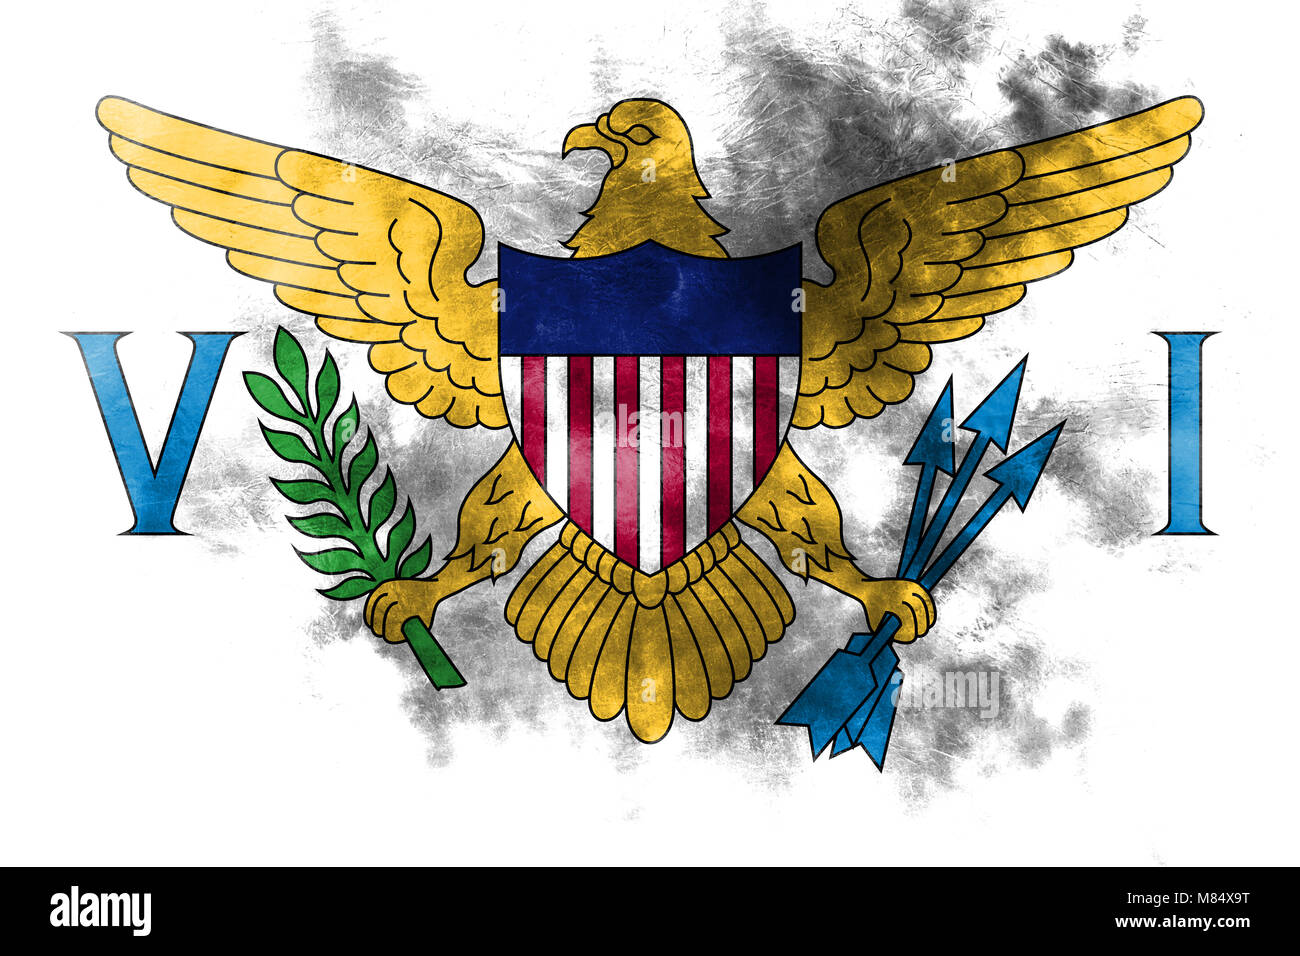 Virgin Islands grunge Flagge, Vereinigten Staaten abhängig Territorium Flagge Stockfoto